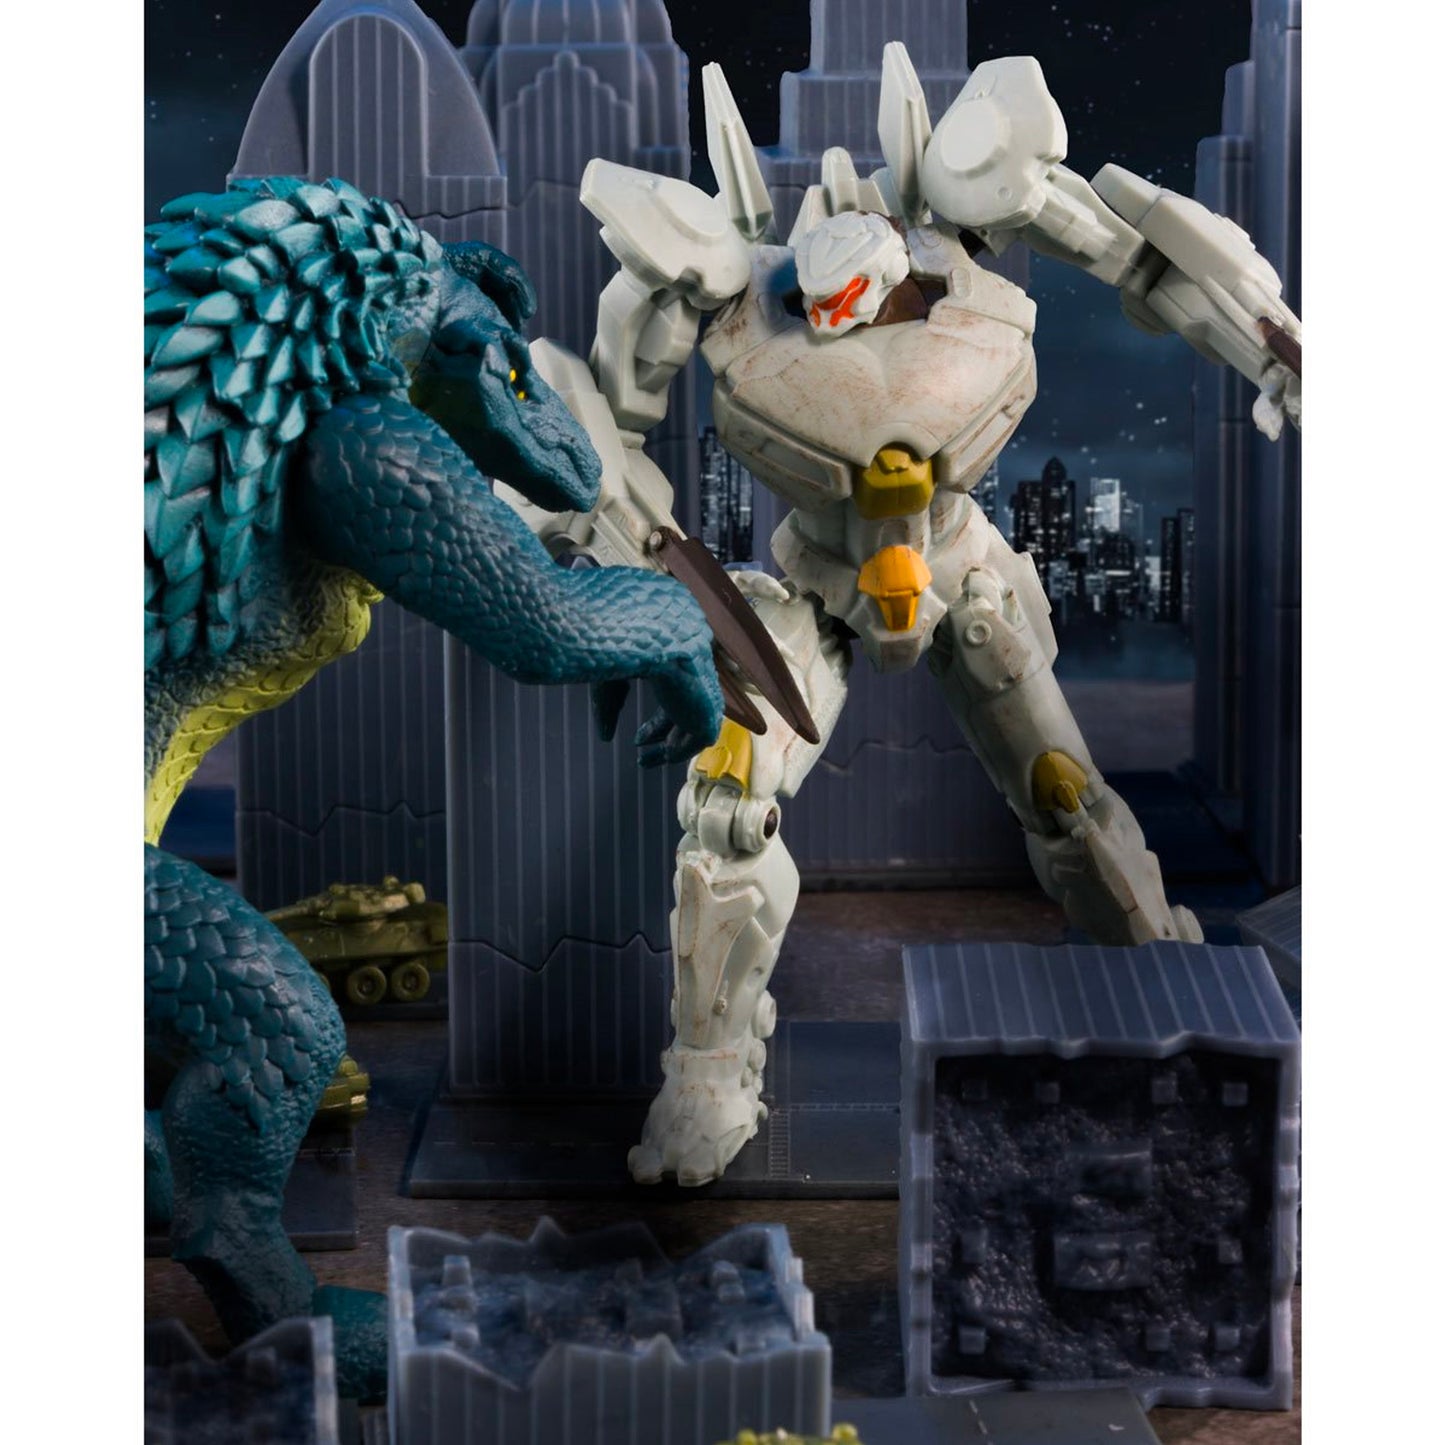 McFarlane Toys: Pacific Rim - Jaeger Wave 1 Striker Eureka 4" Tall Action Figure with Comic Book